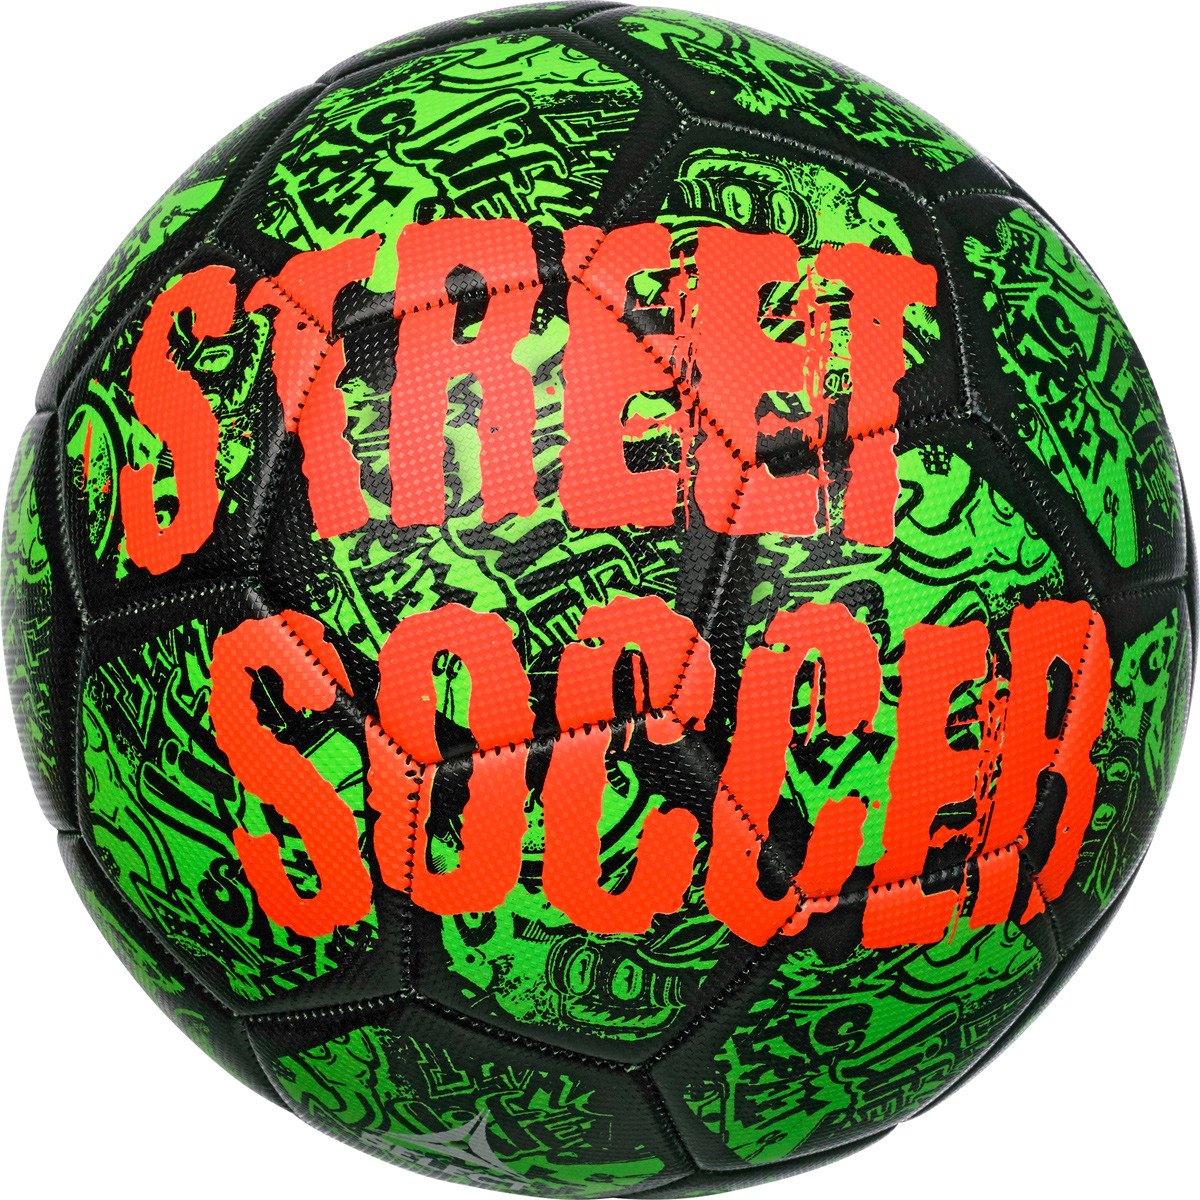 Select Street Soccer v22 Fodbold 